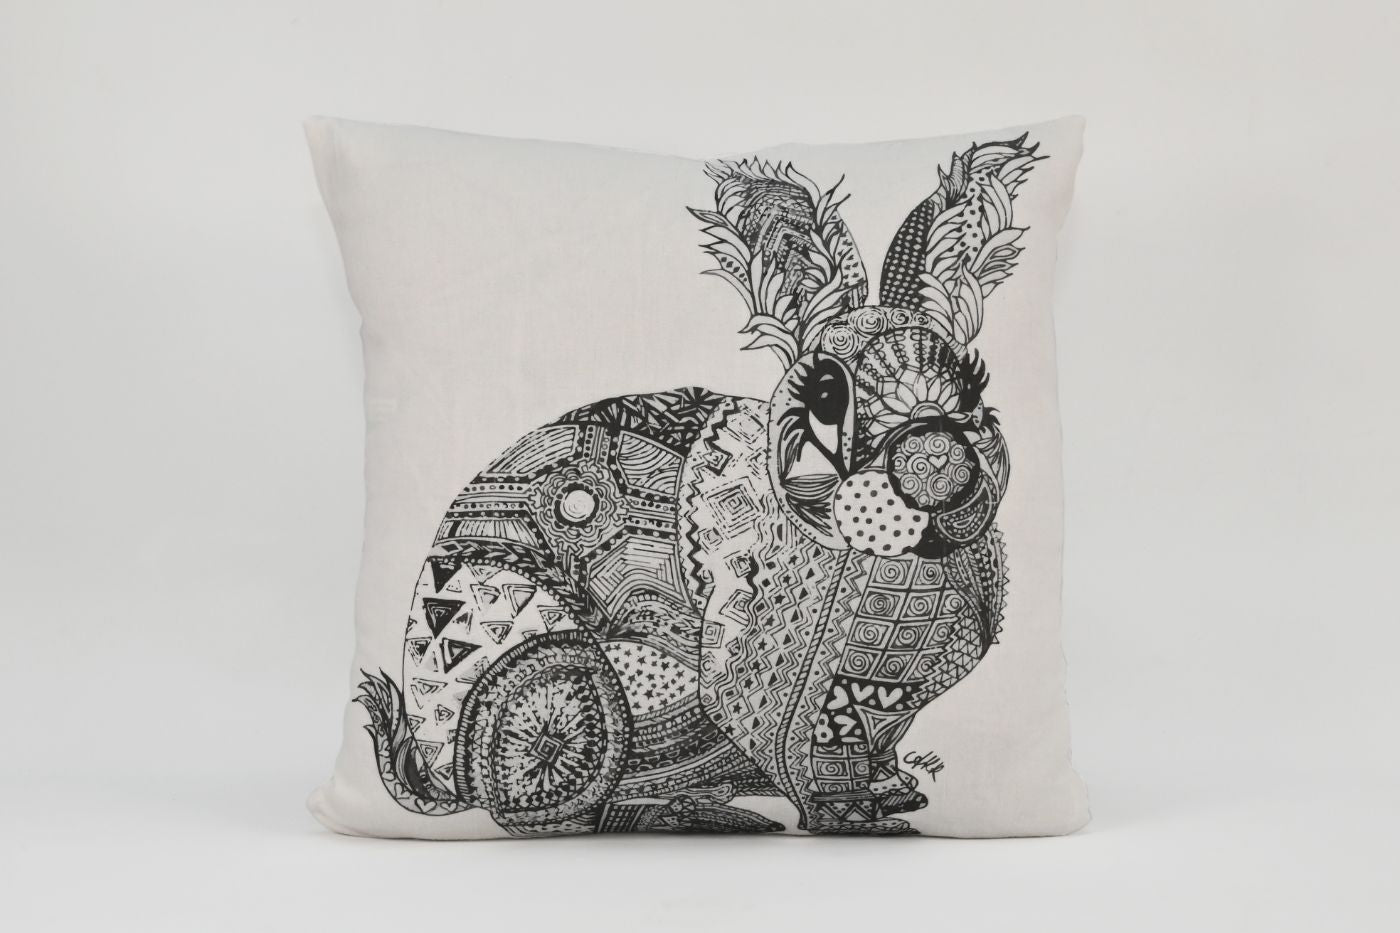 Boris the Bunny Natural Linen Cushion - Black and White